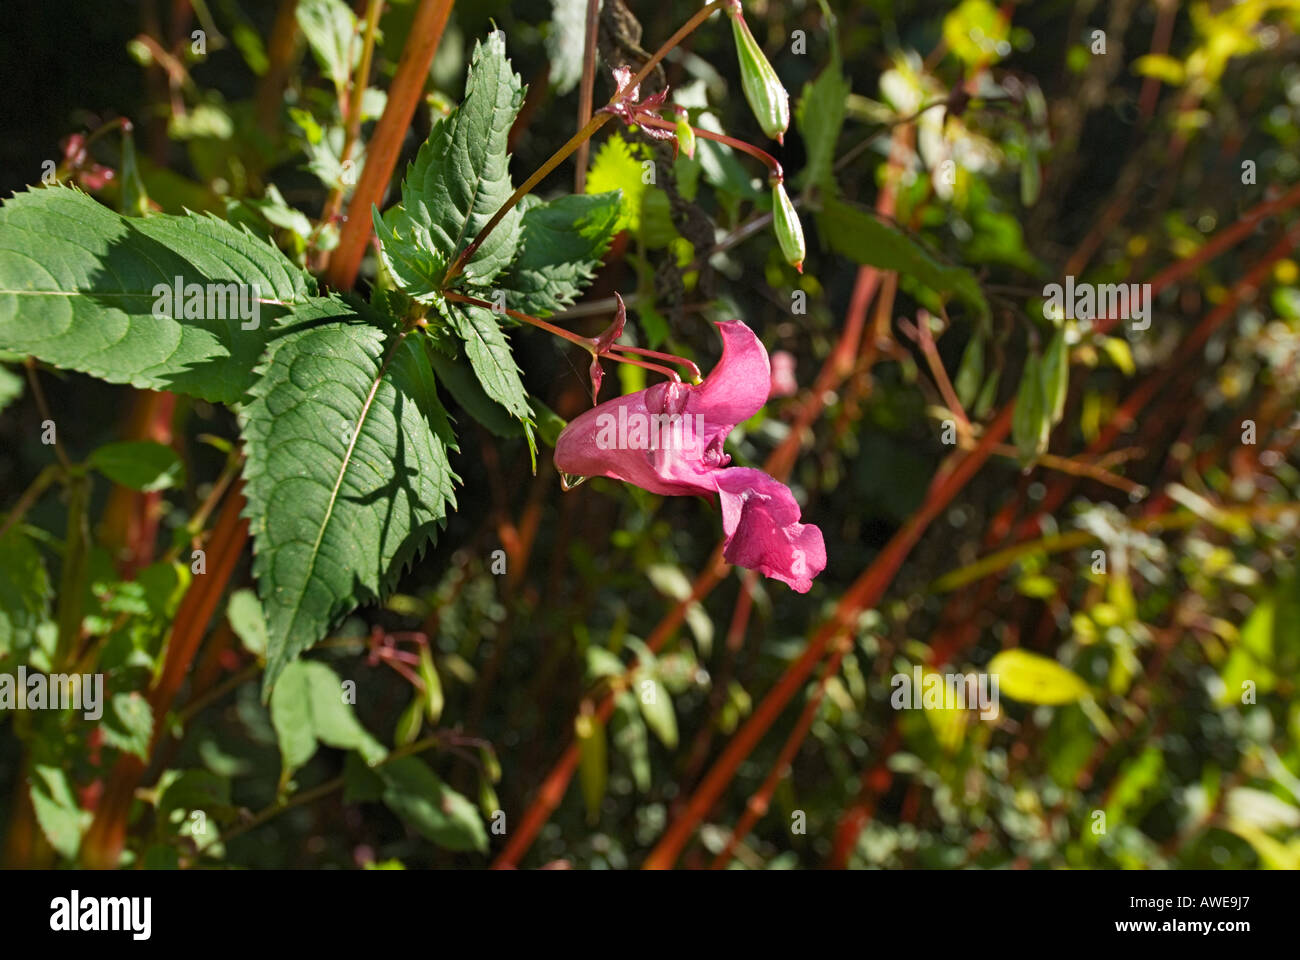 Impatiens glandulifera Emscherorchidee  Balsaminaceae, indian flower Stock Photo